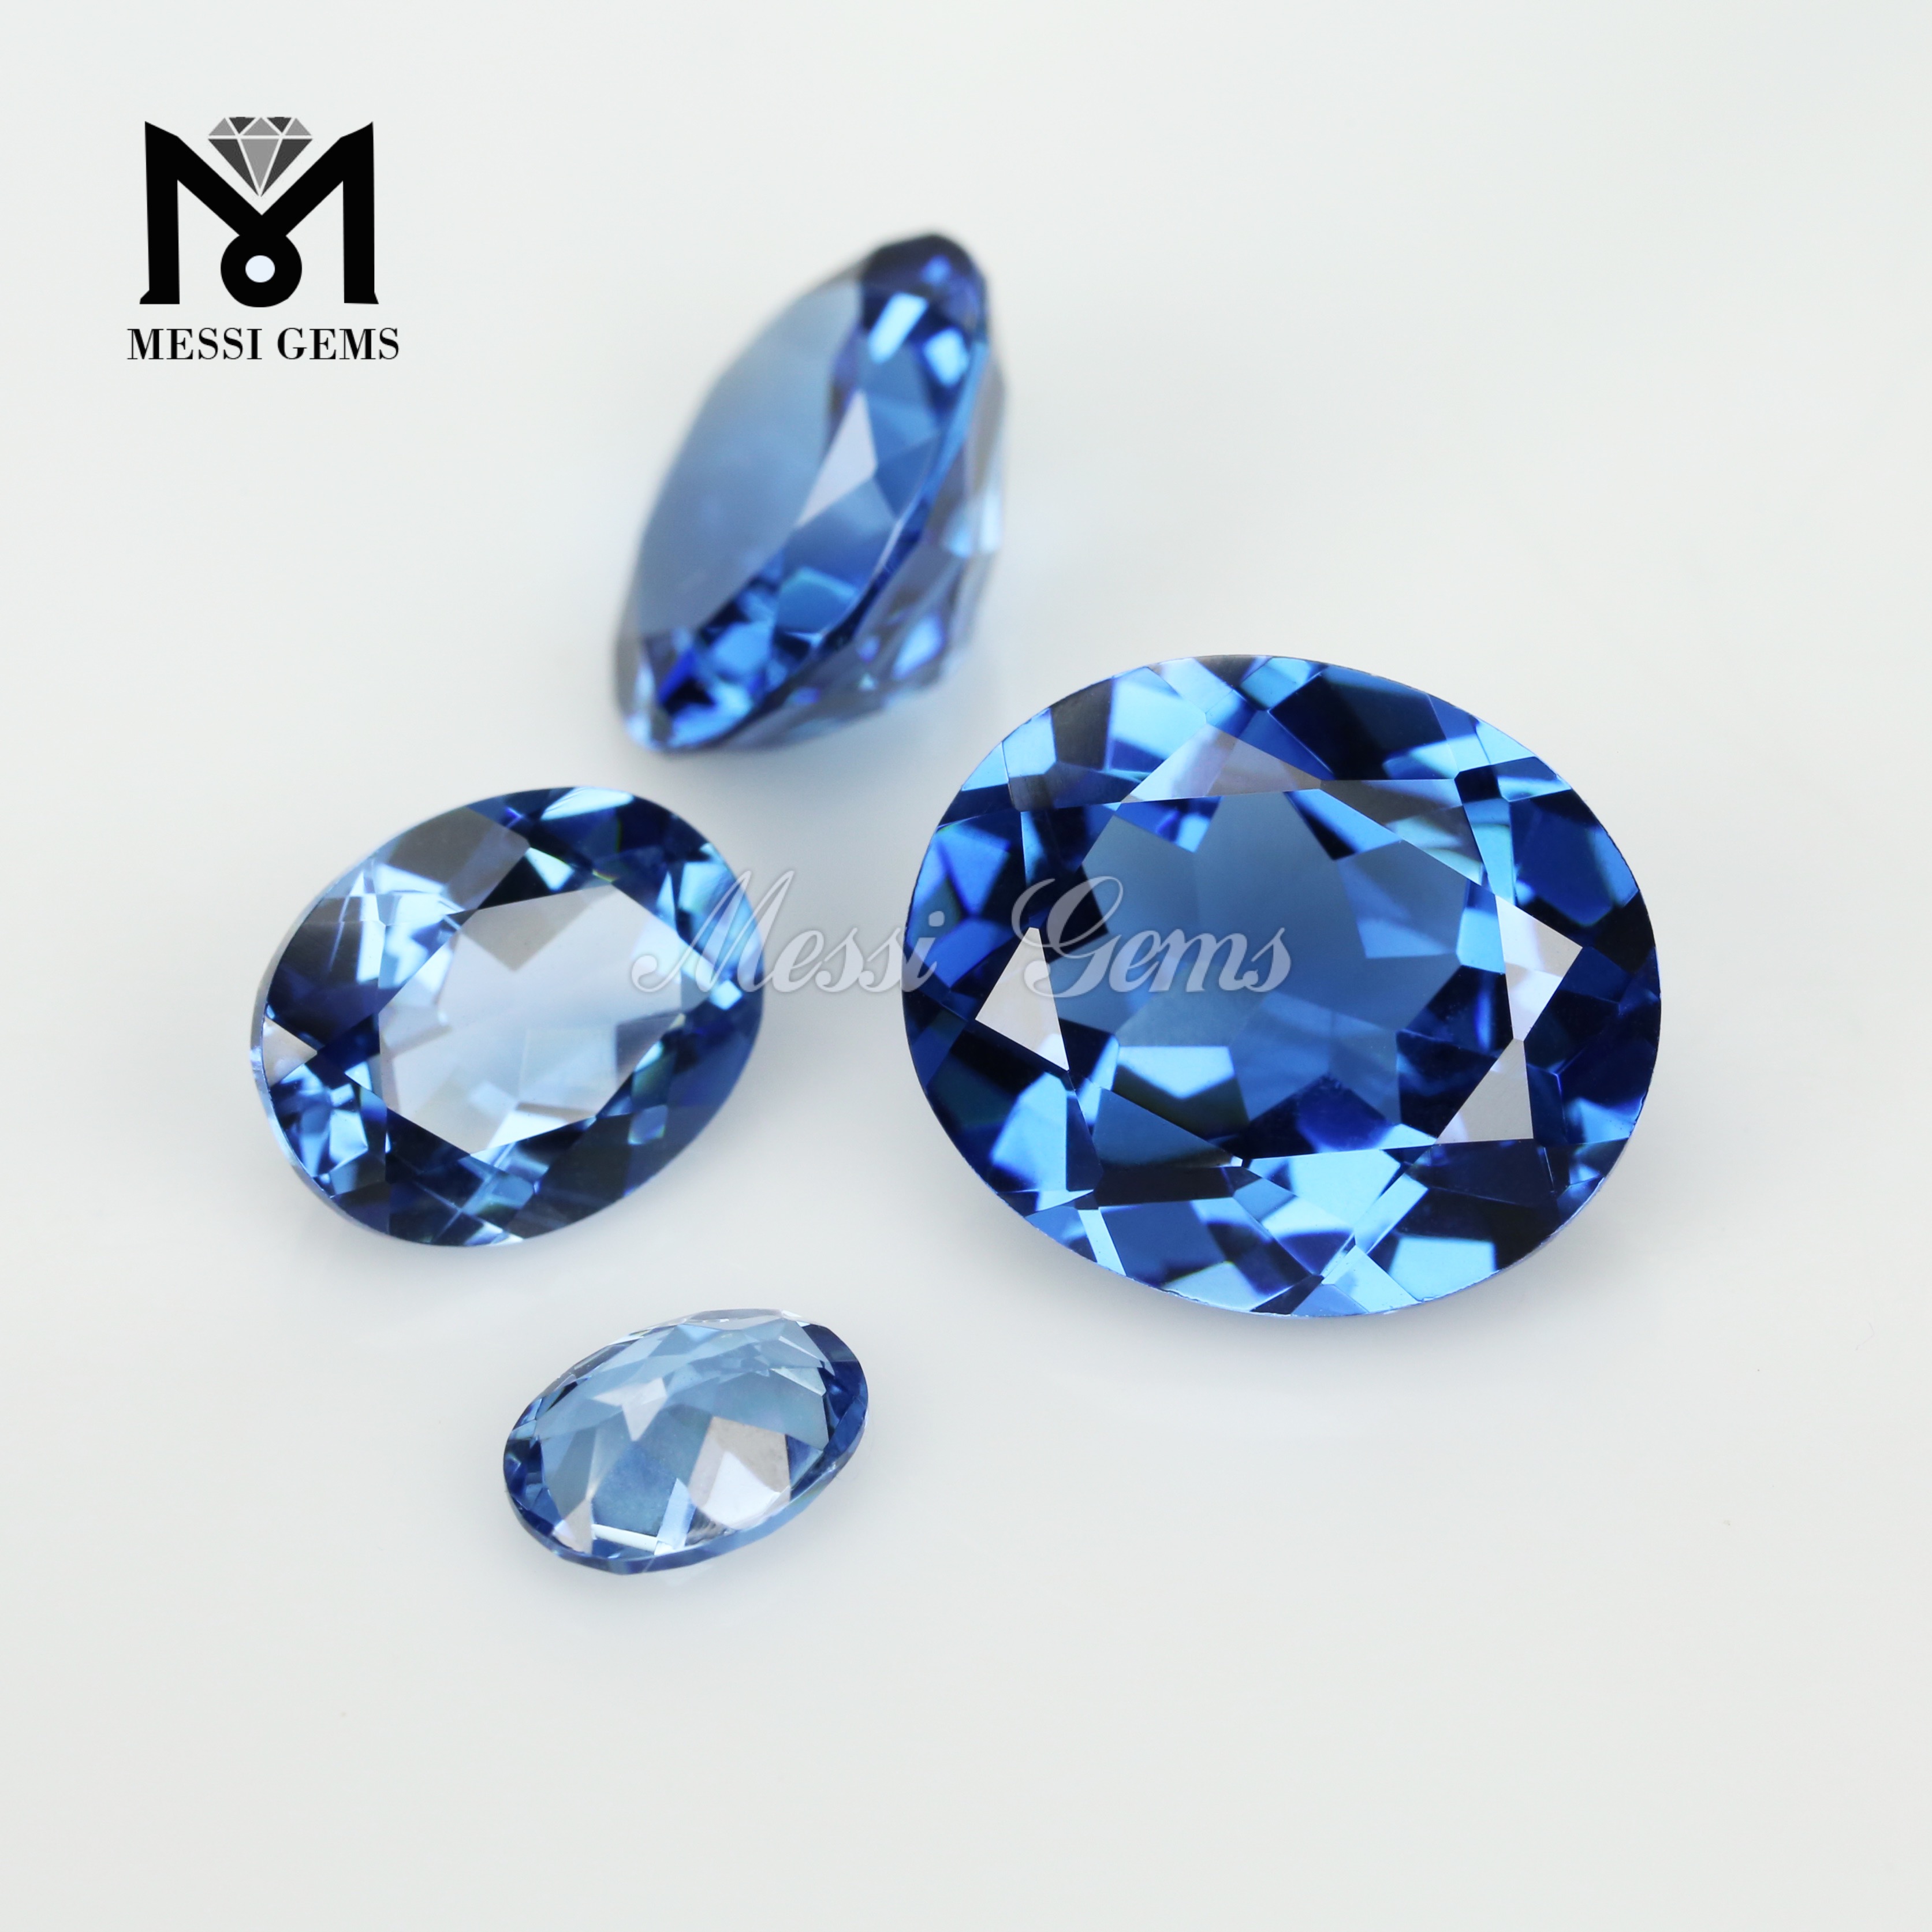 Piedra preciosa nanosital azul zafiro talla ovalada creada en laboratorio